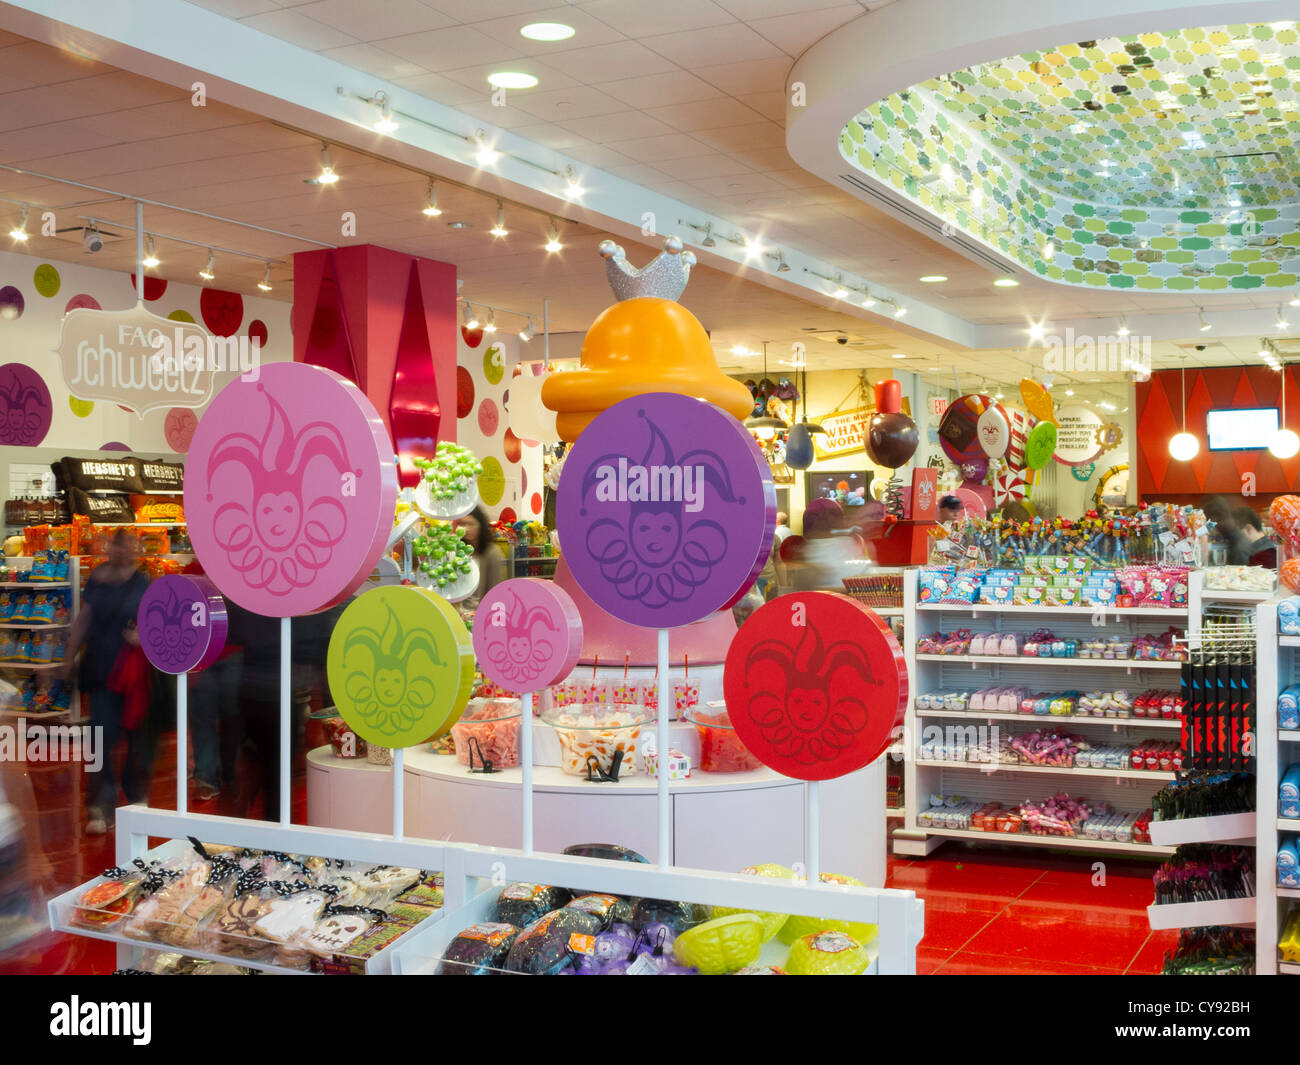 FAO Schwarz Flagship Toy Store Interior, NYC Stock Photo